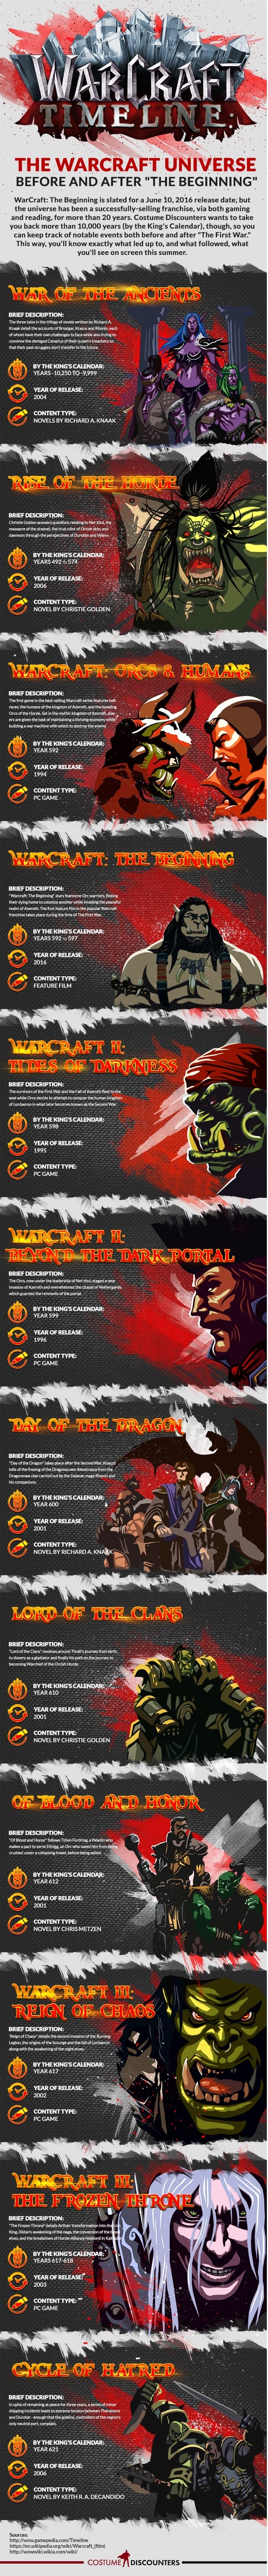 WarCraft-Timeline-Infographic-4